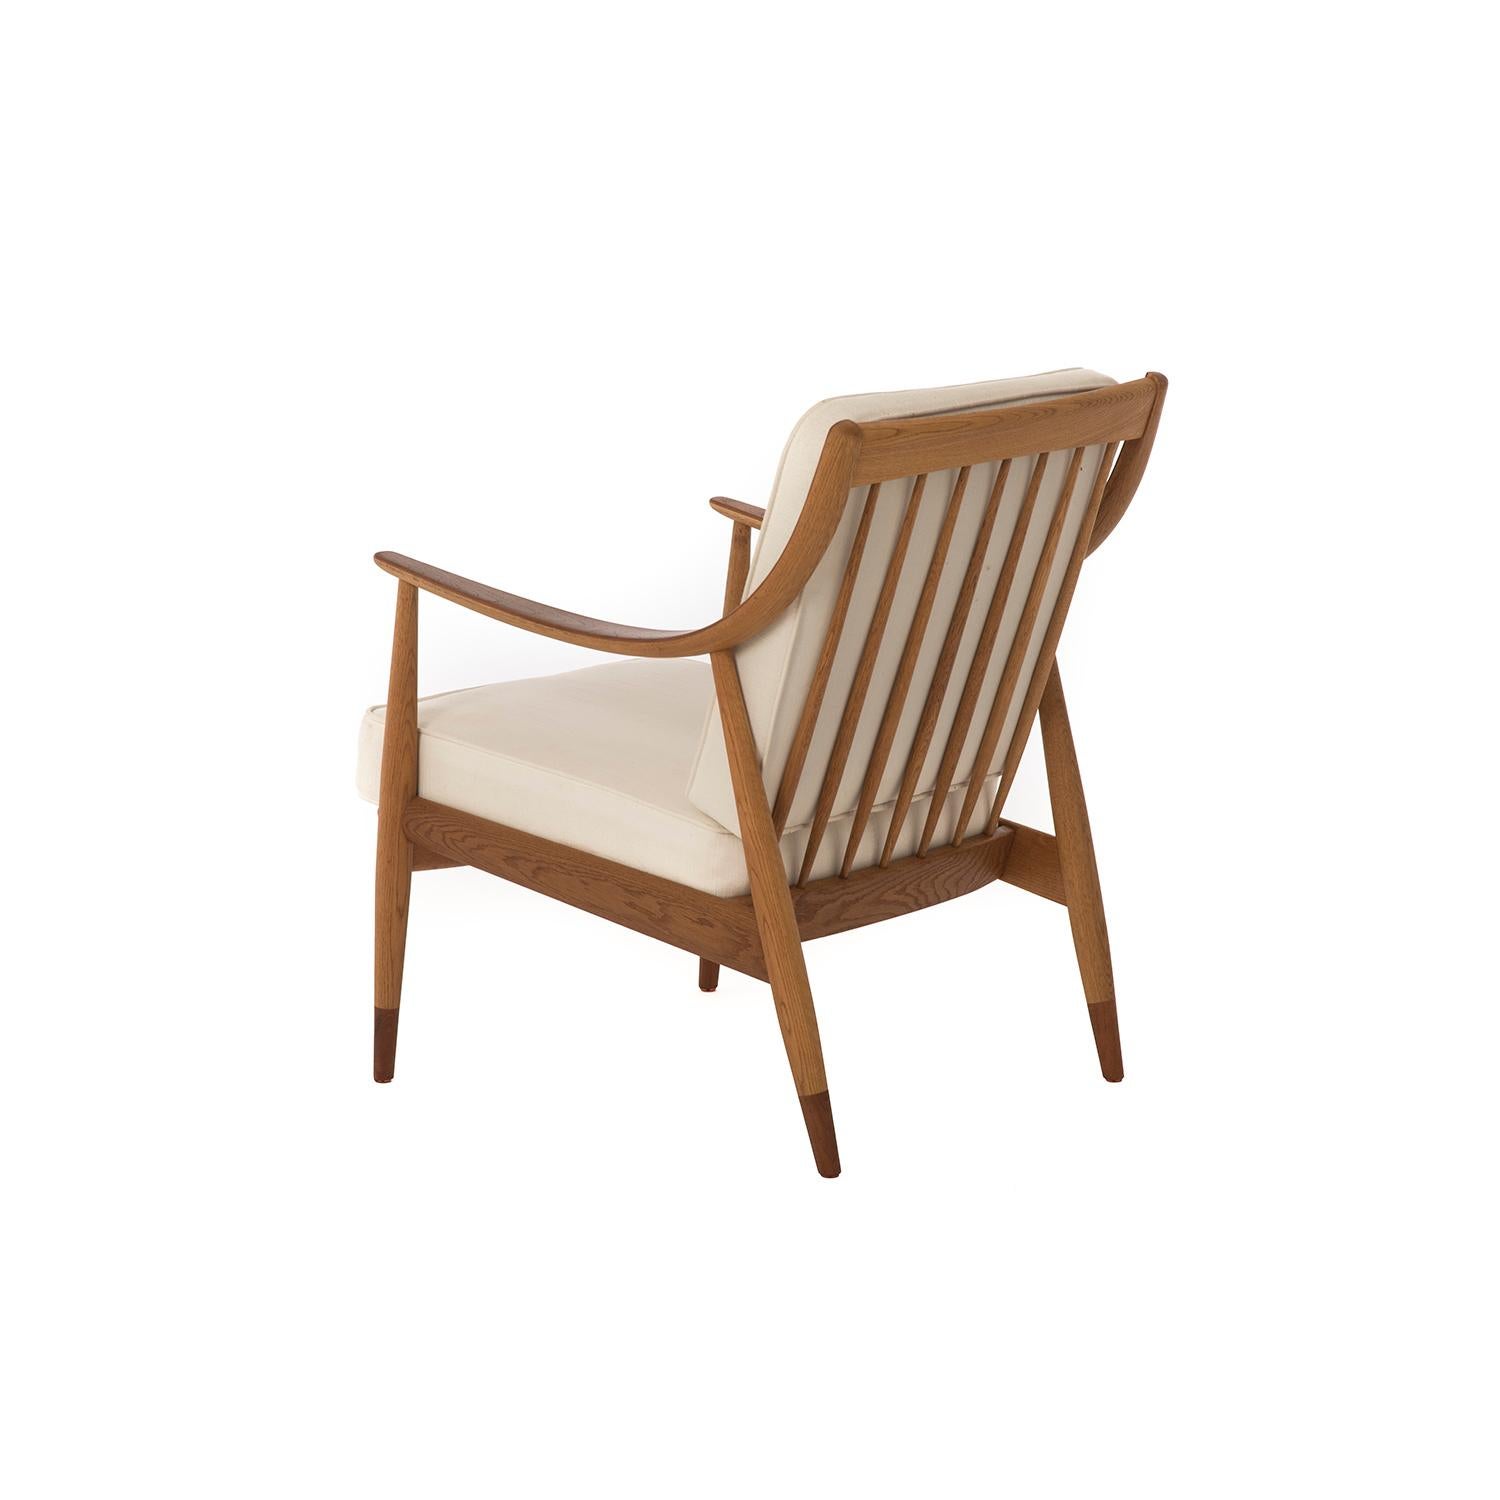 Oiled Danish Modern Teak and Oak Lounge Chair, Sweeping Arms Hvidt & Molgaard Design